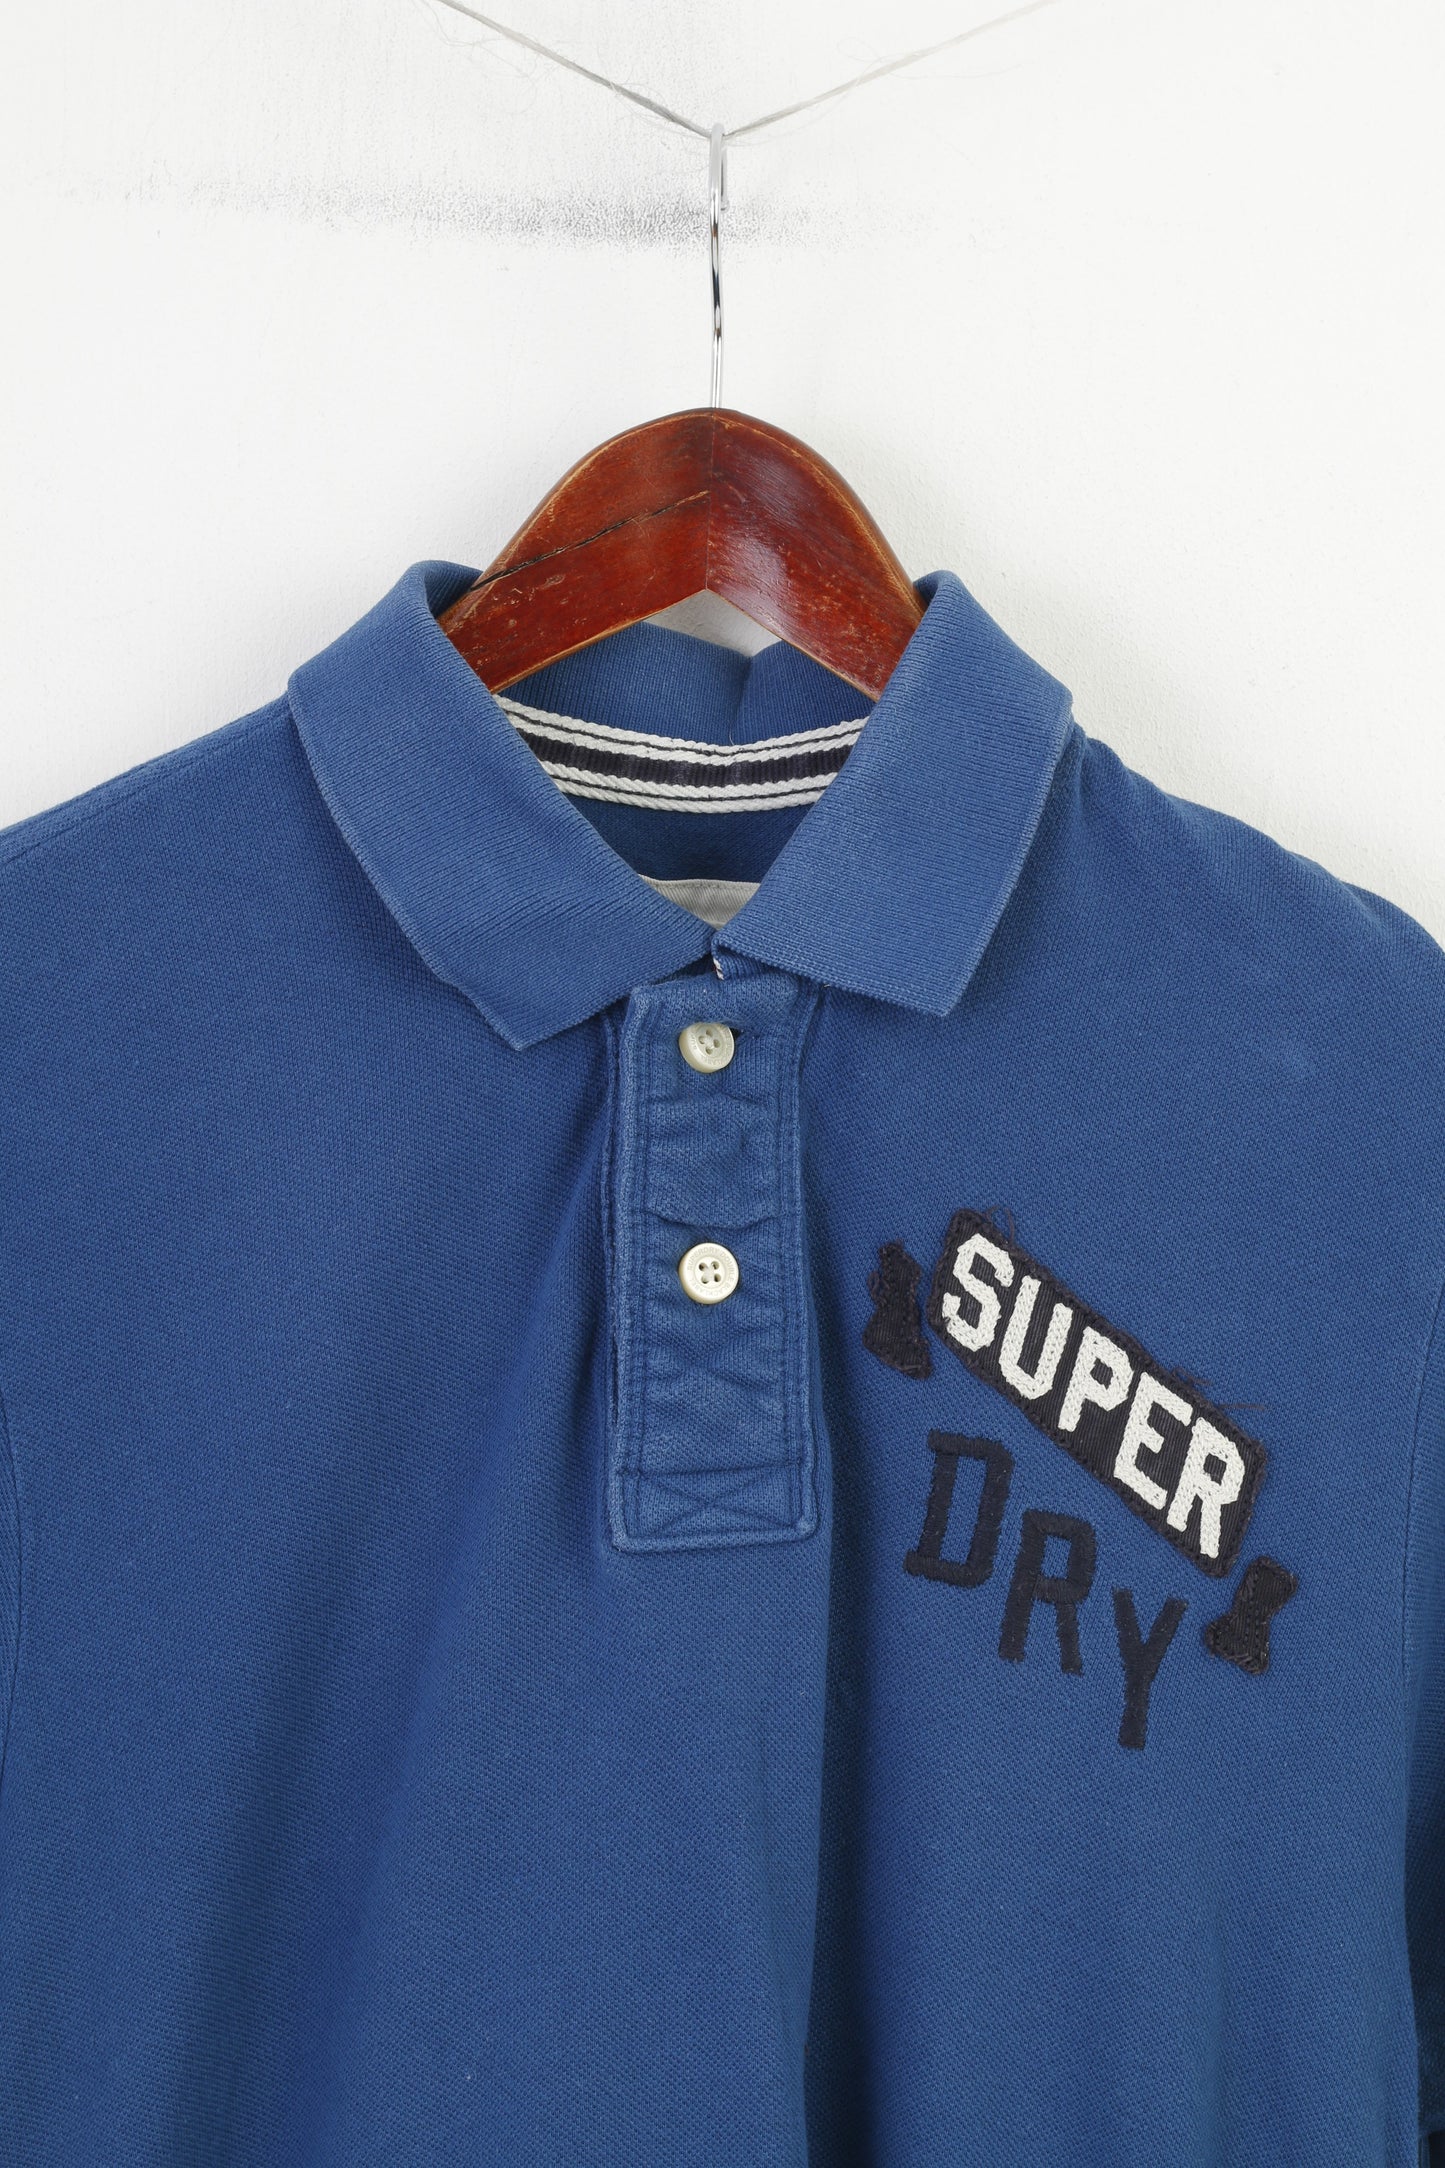 Superdry Men M Polo Shirt Navy Cotton Double Black Label Polo Fit Vintage Short Sleeve Top